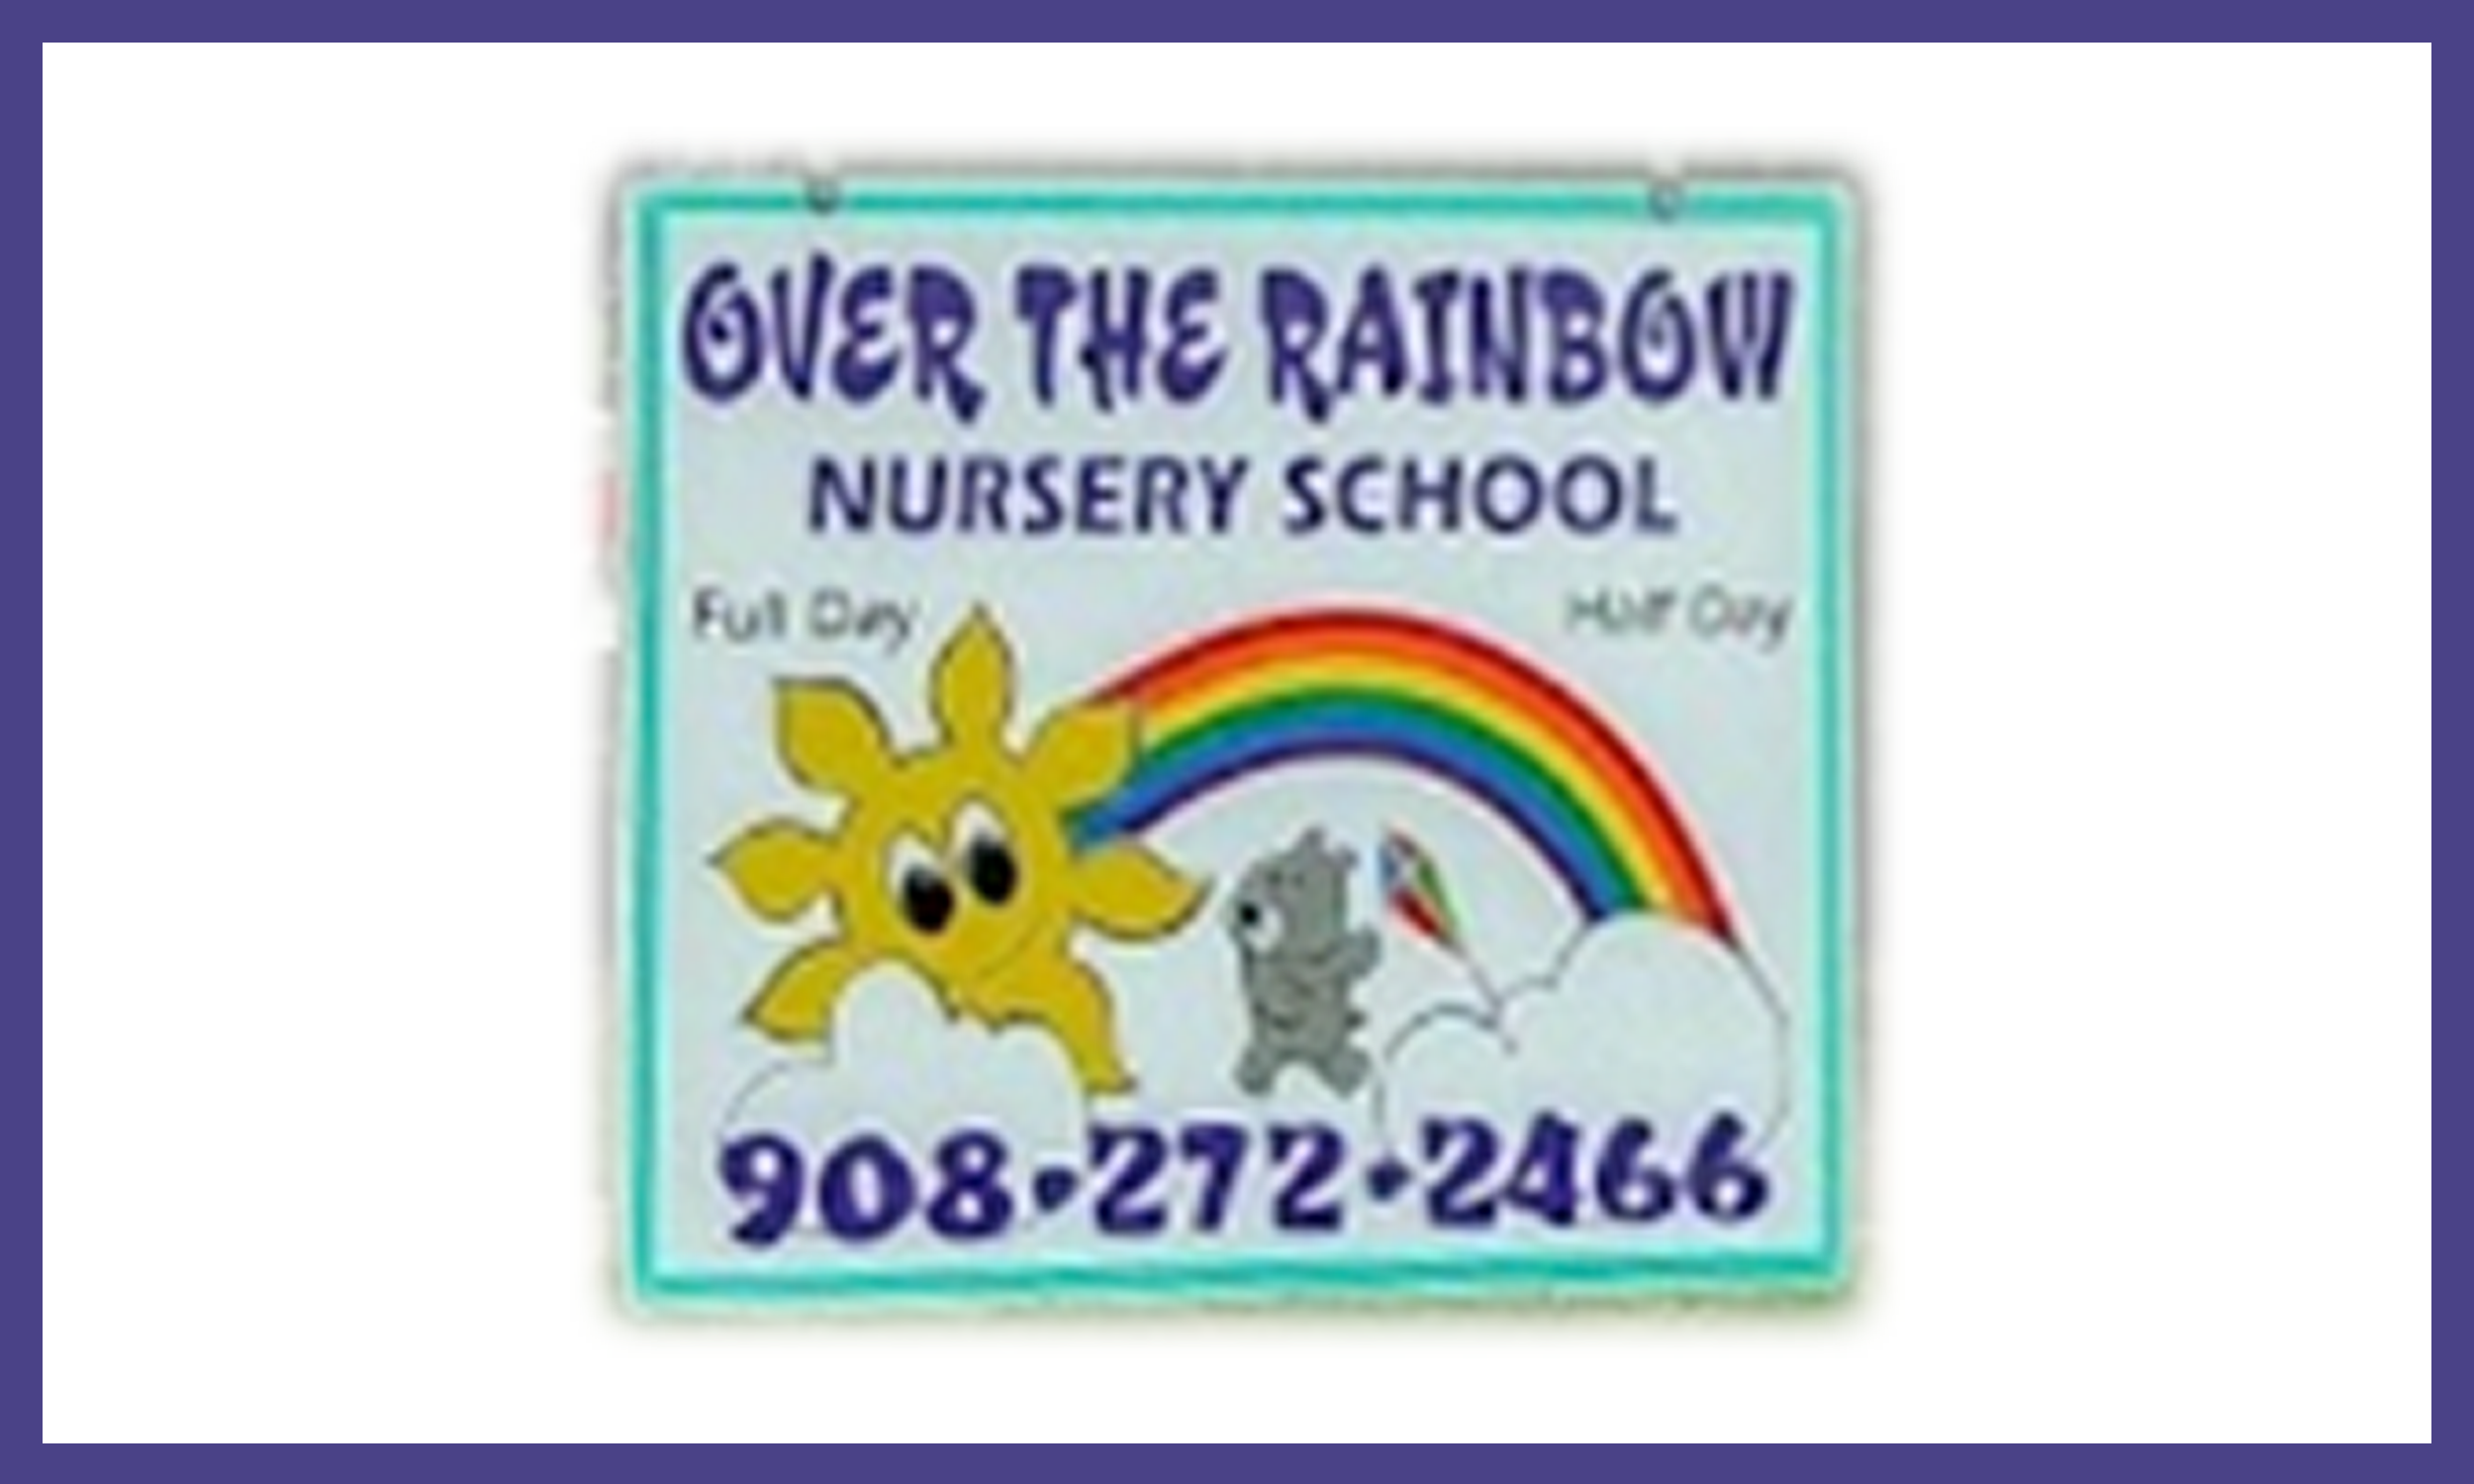 Over the Rainbow Nursery School